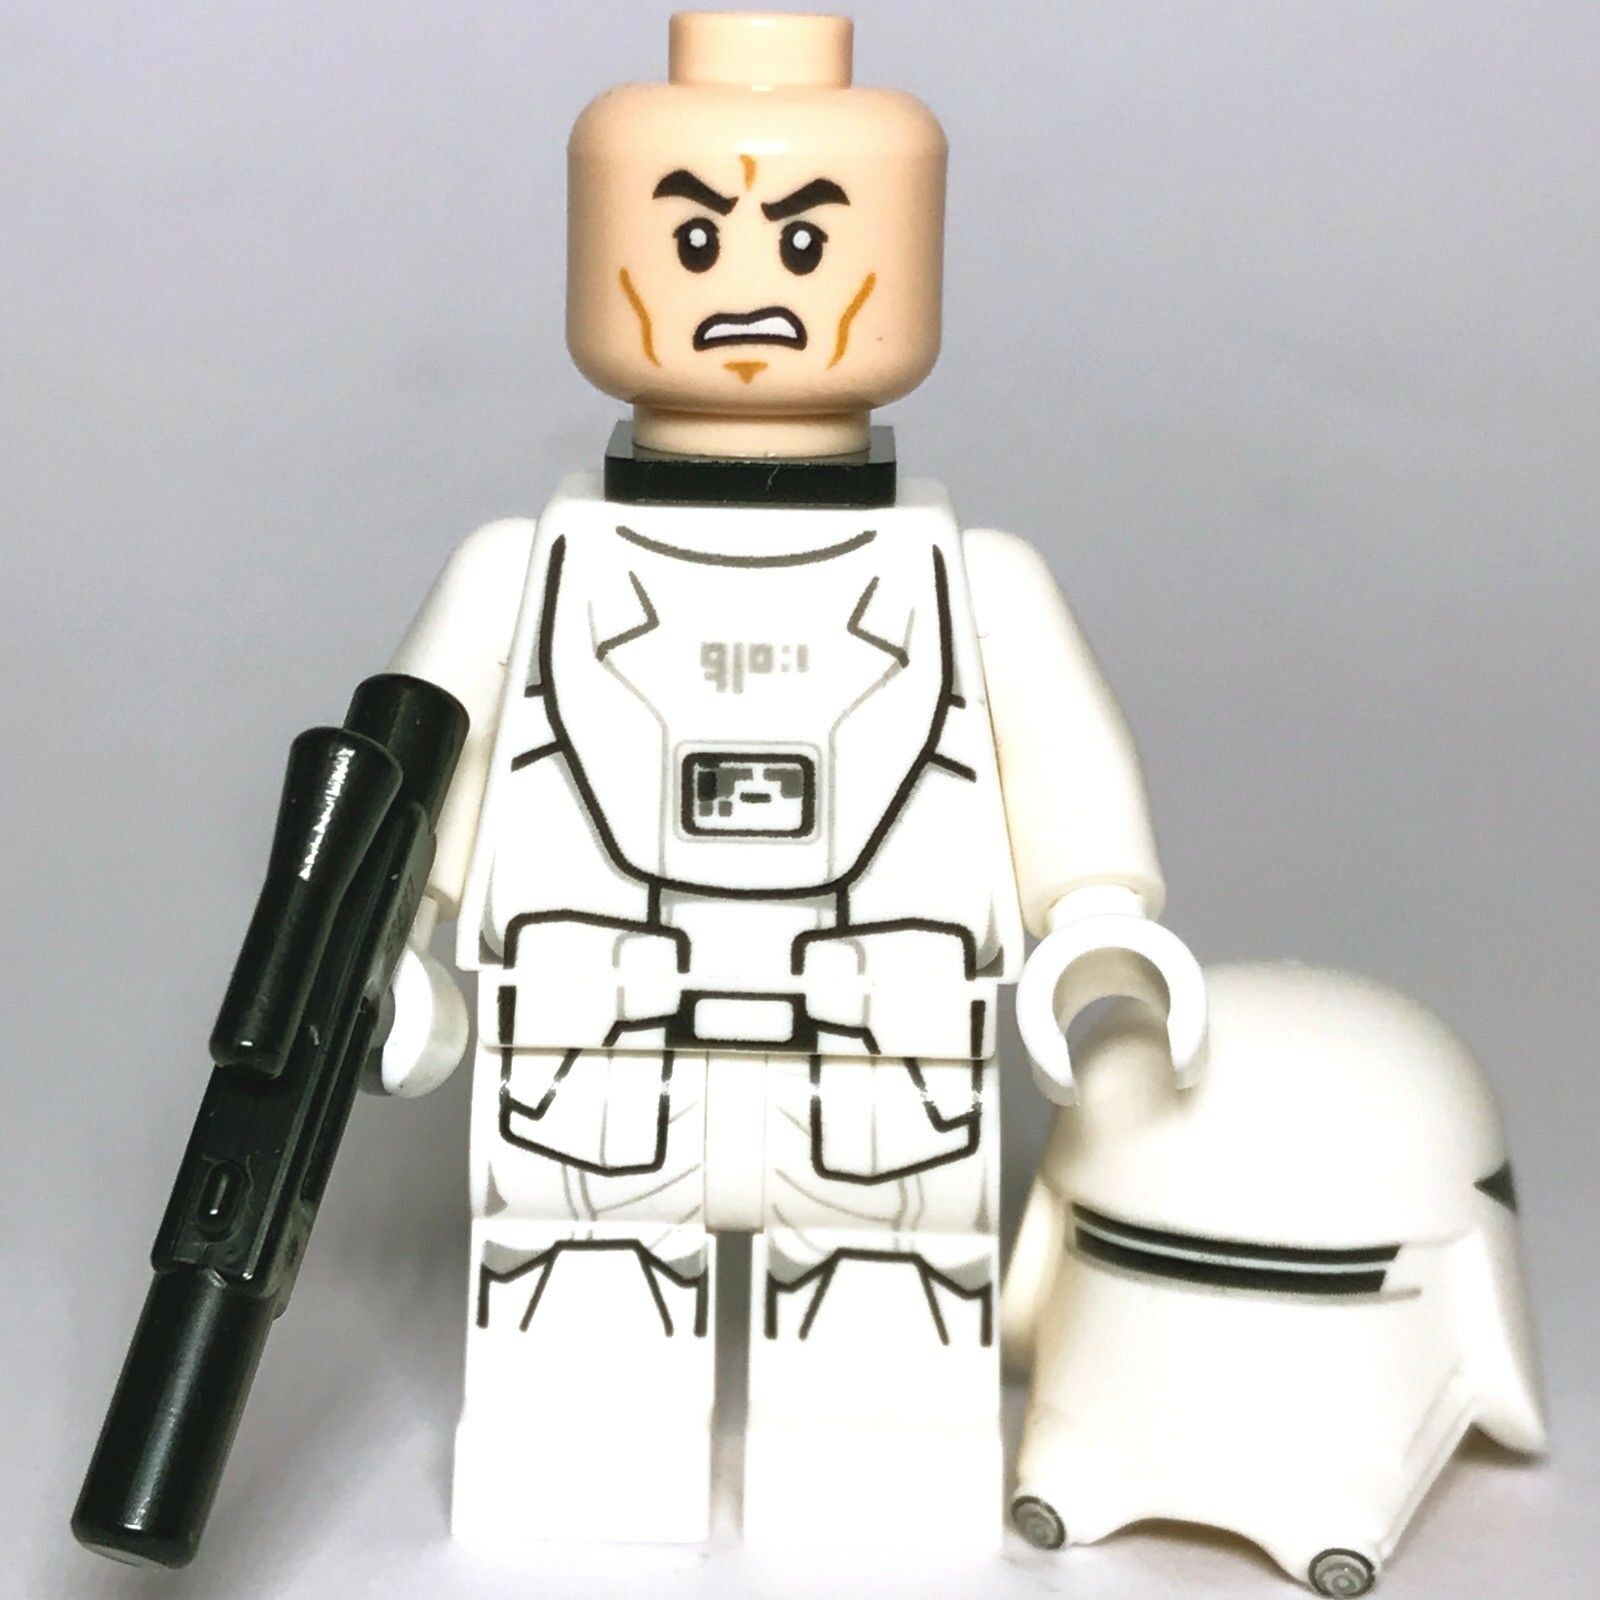 New Star Wars LEGO First Order Snowtrooper The Force Awakens Minifigure 75126 - Bricks & Figures